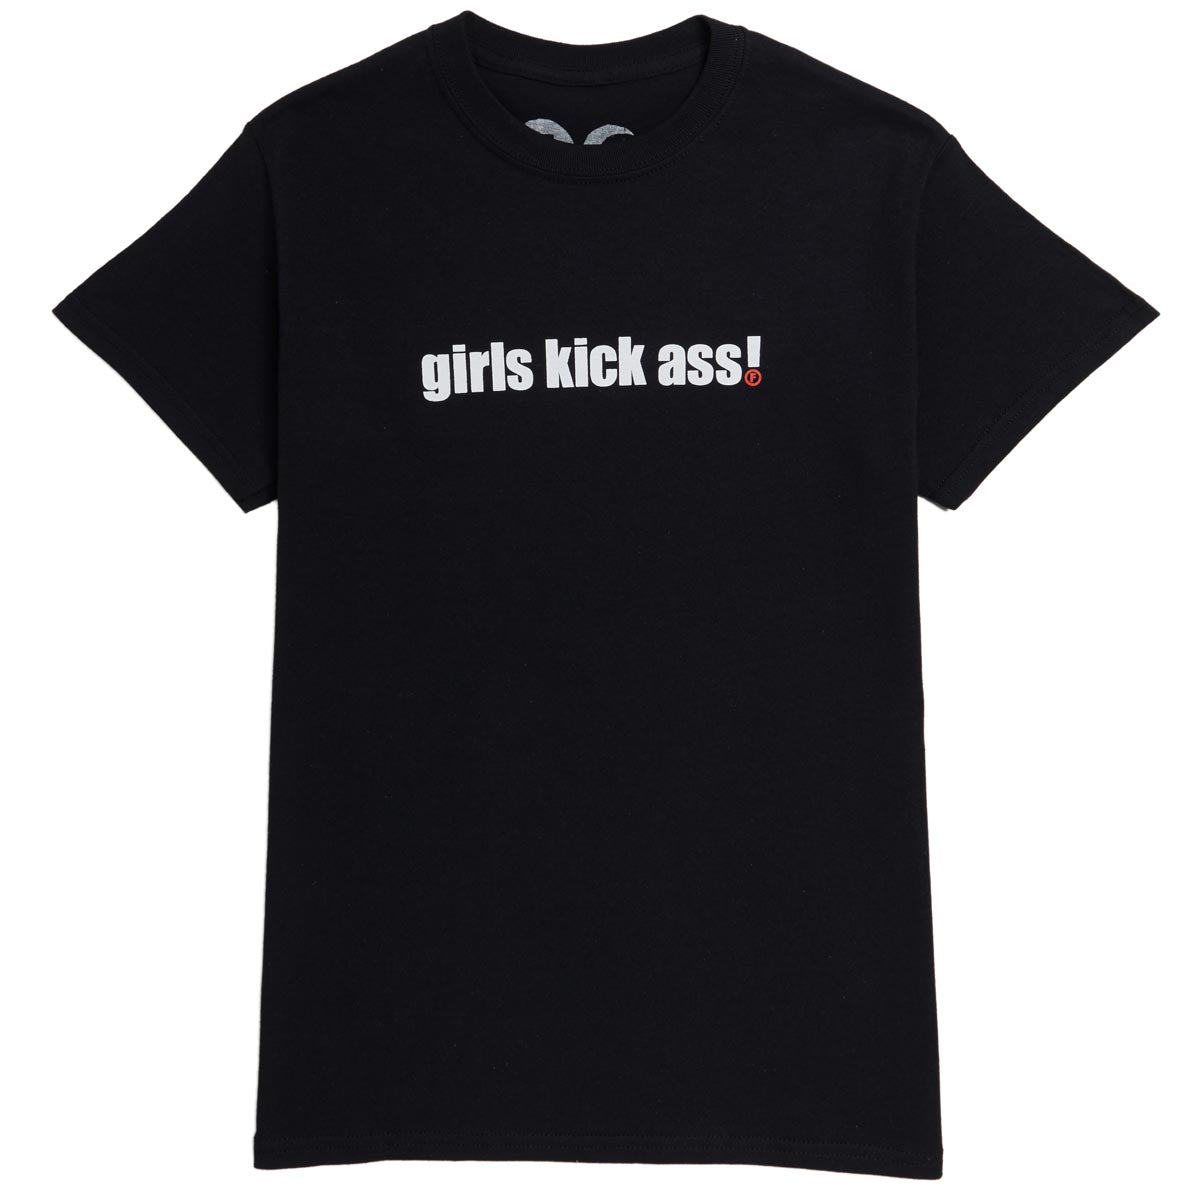 Foundation Girls Kick Ass T-Shirt - Black image 1